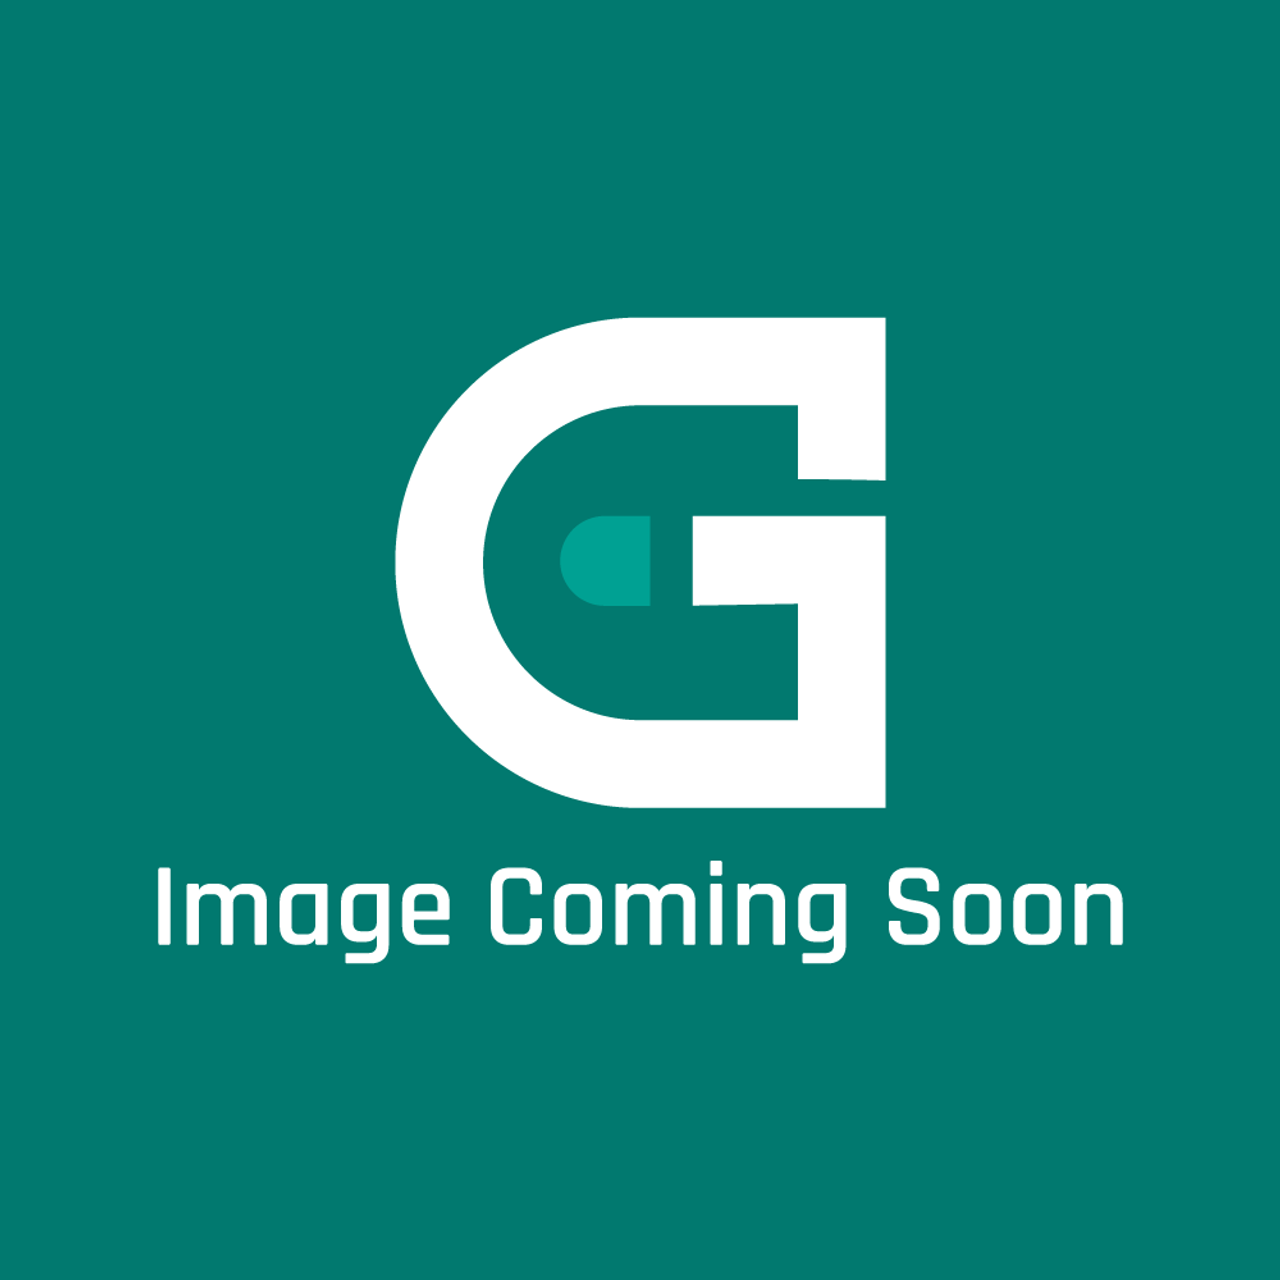 GE Appliances WR86X105 - Capillary Tb - Image Coming Soon!